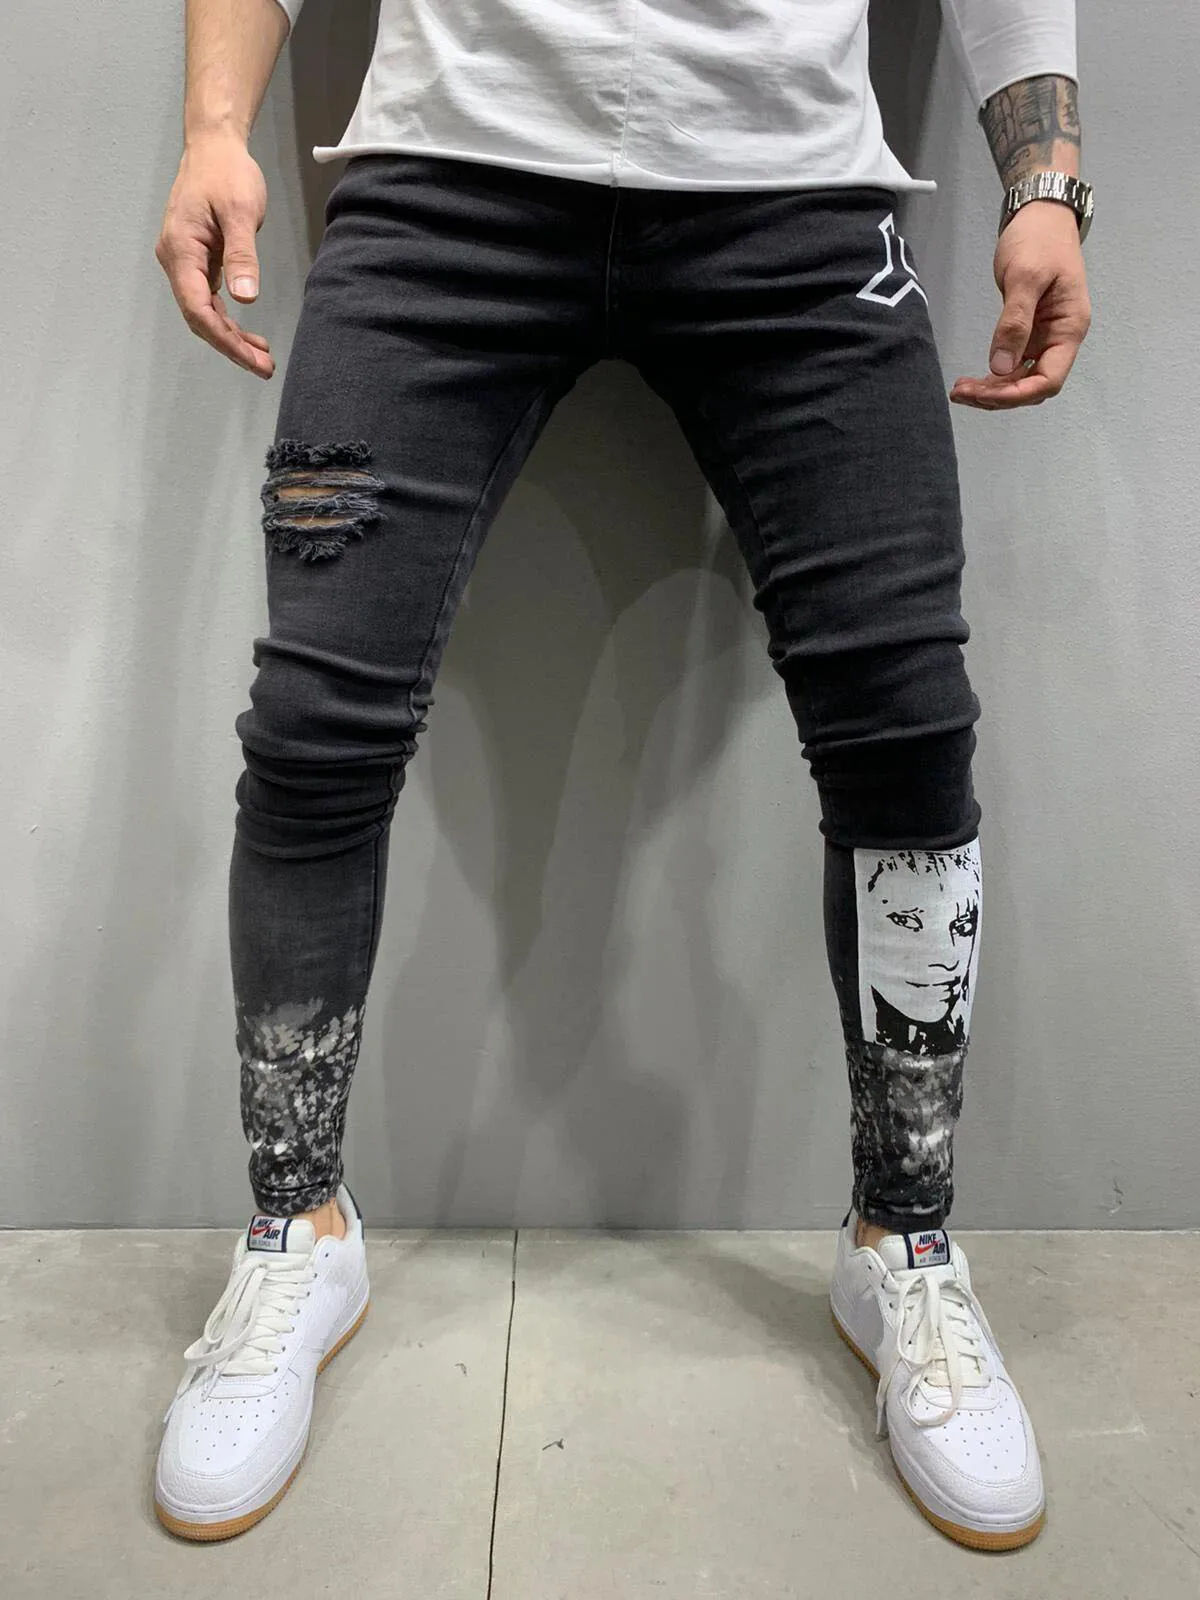 

Kpop Clothes Pantalon Homme Jean Ripped Baqueros Hombre Stretch Biker Jeans Men Printed Black Skinny Hip Hop Denim Jeans for Men